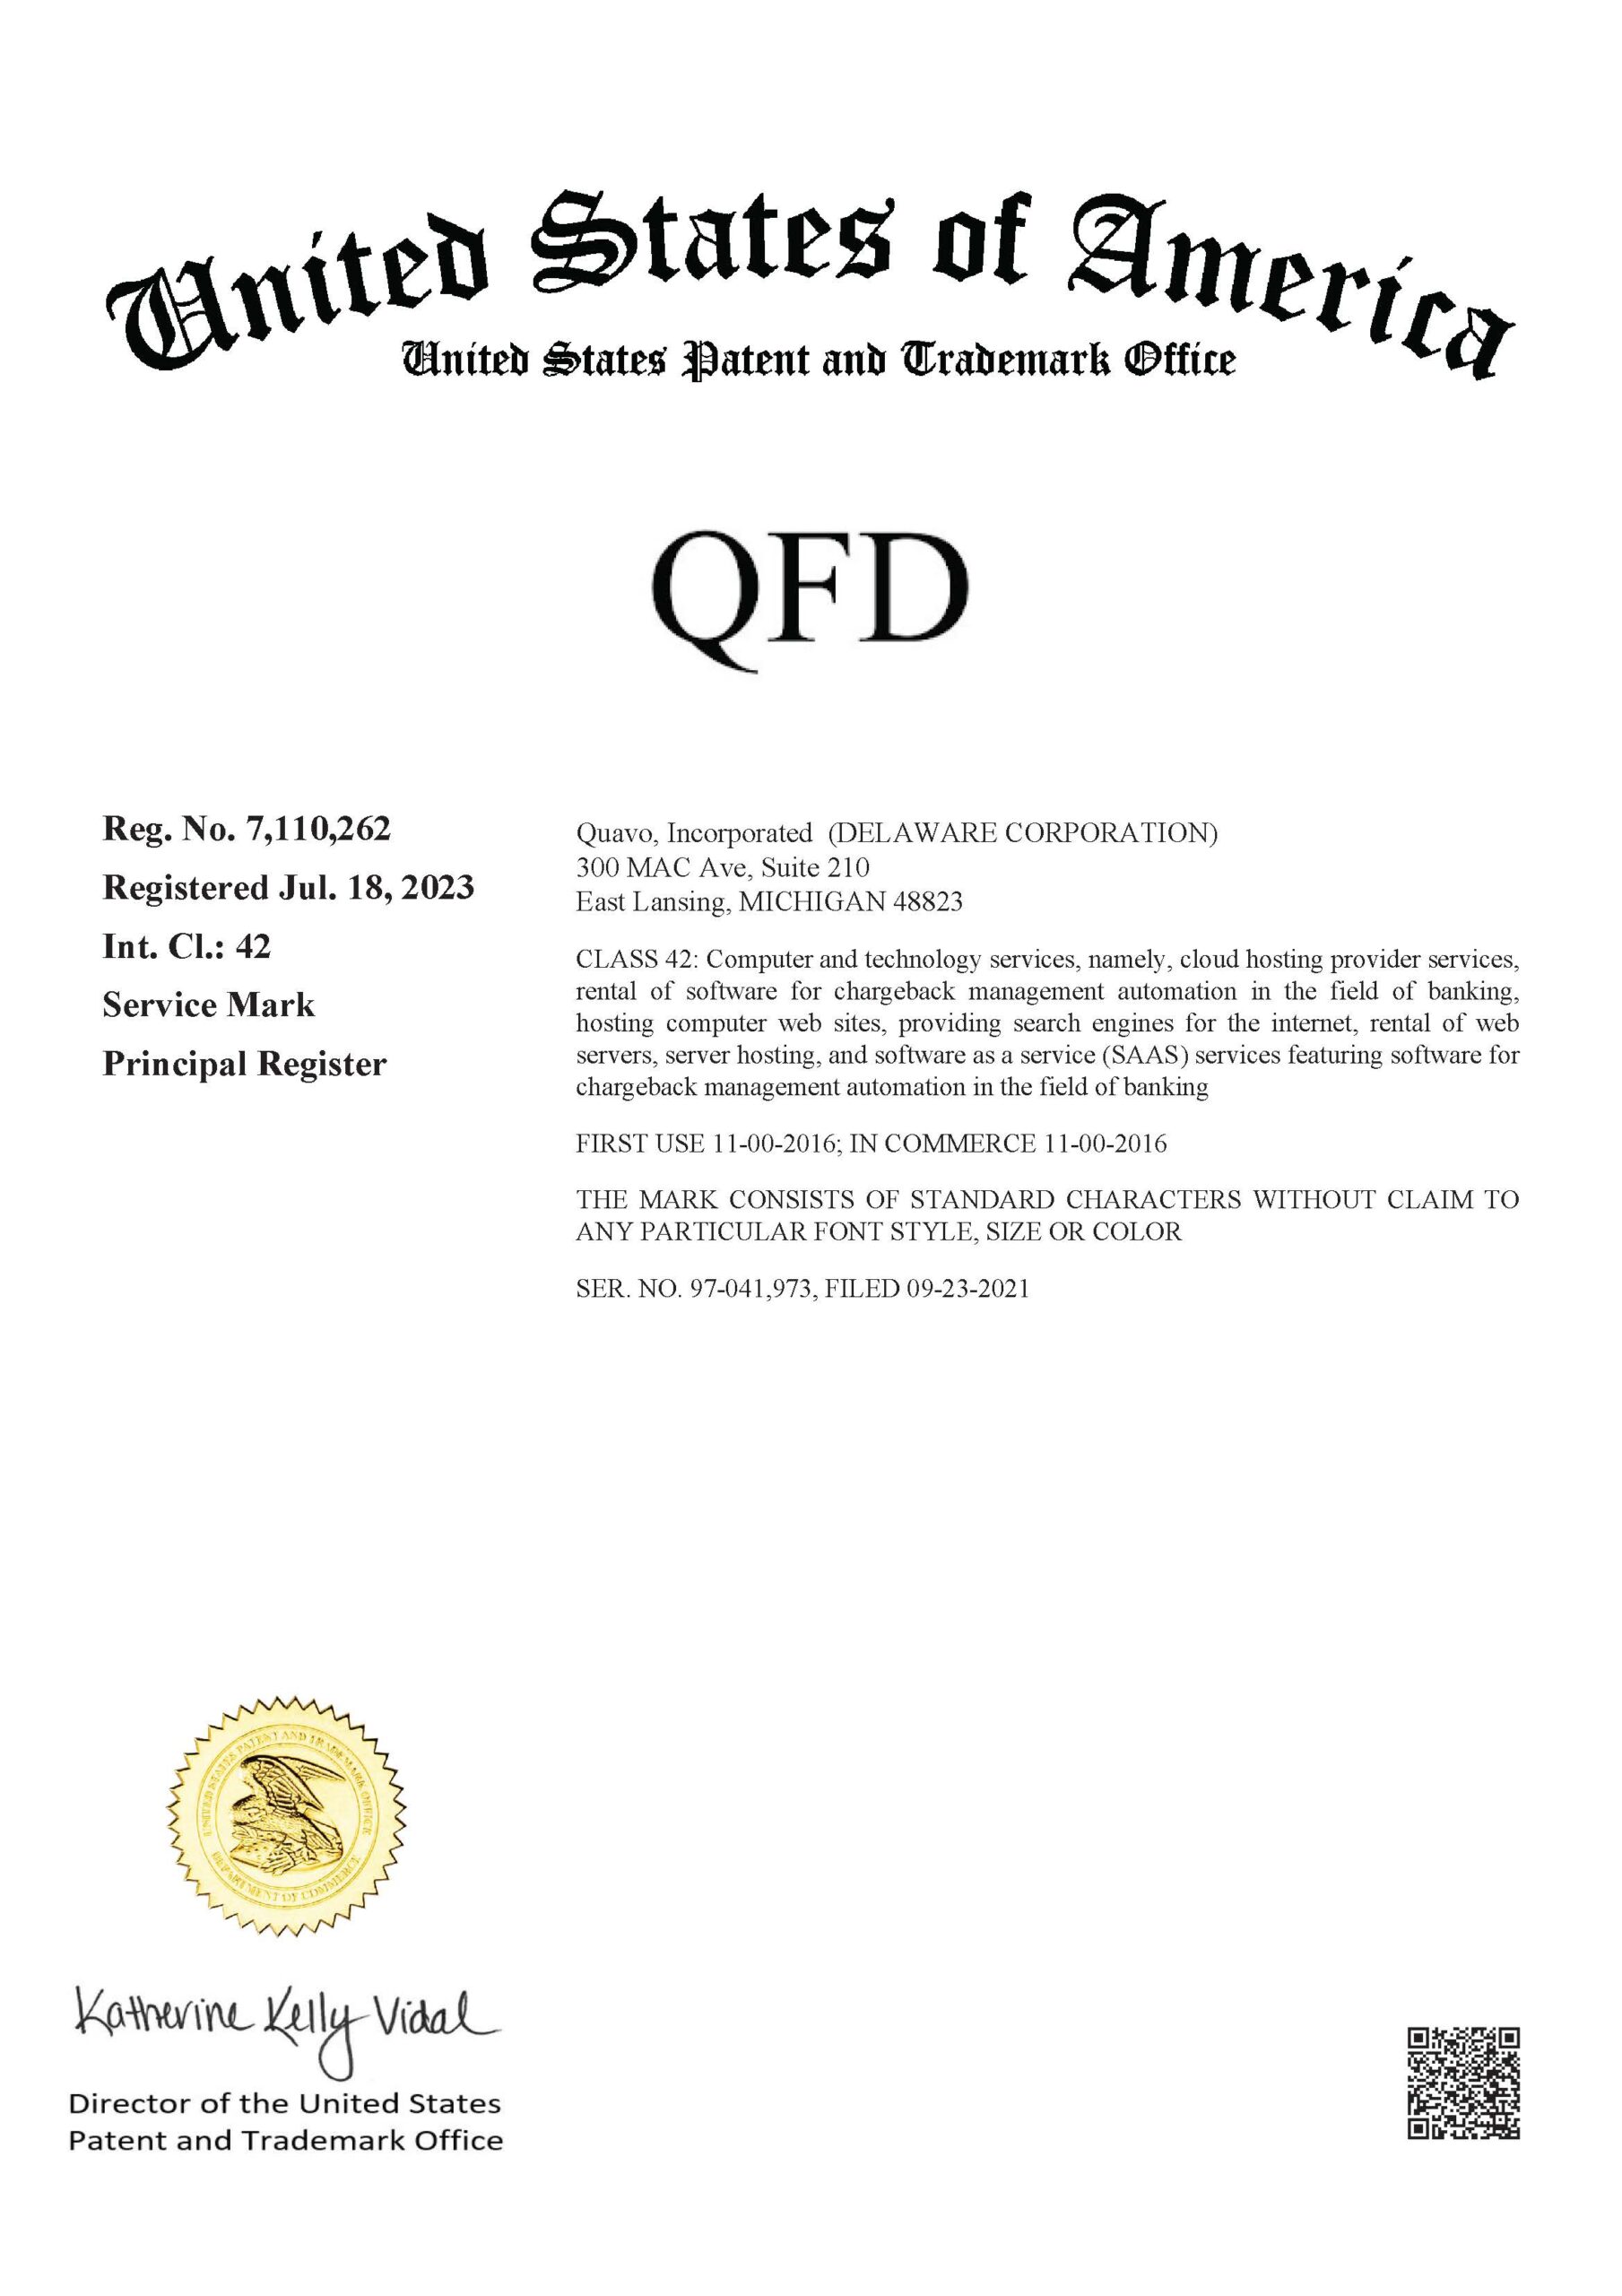 QFD trademark registration 